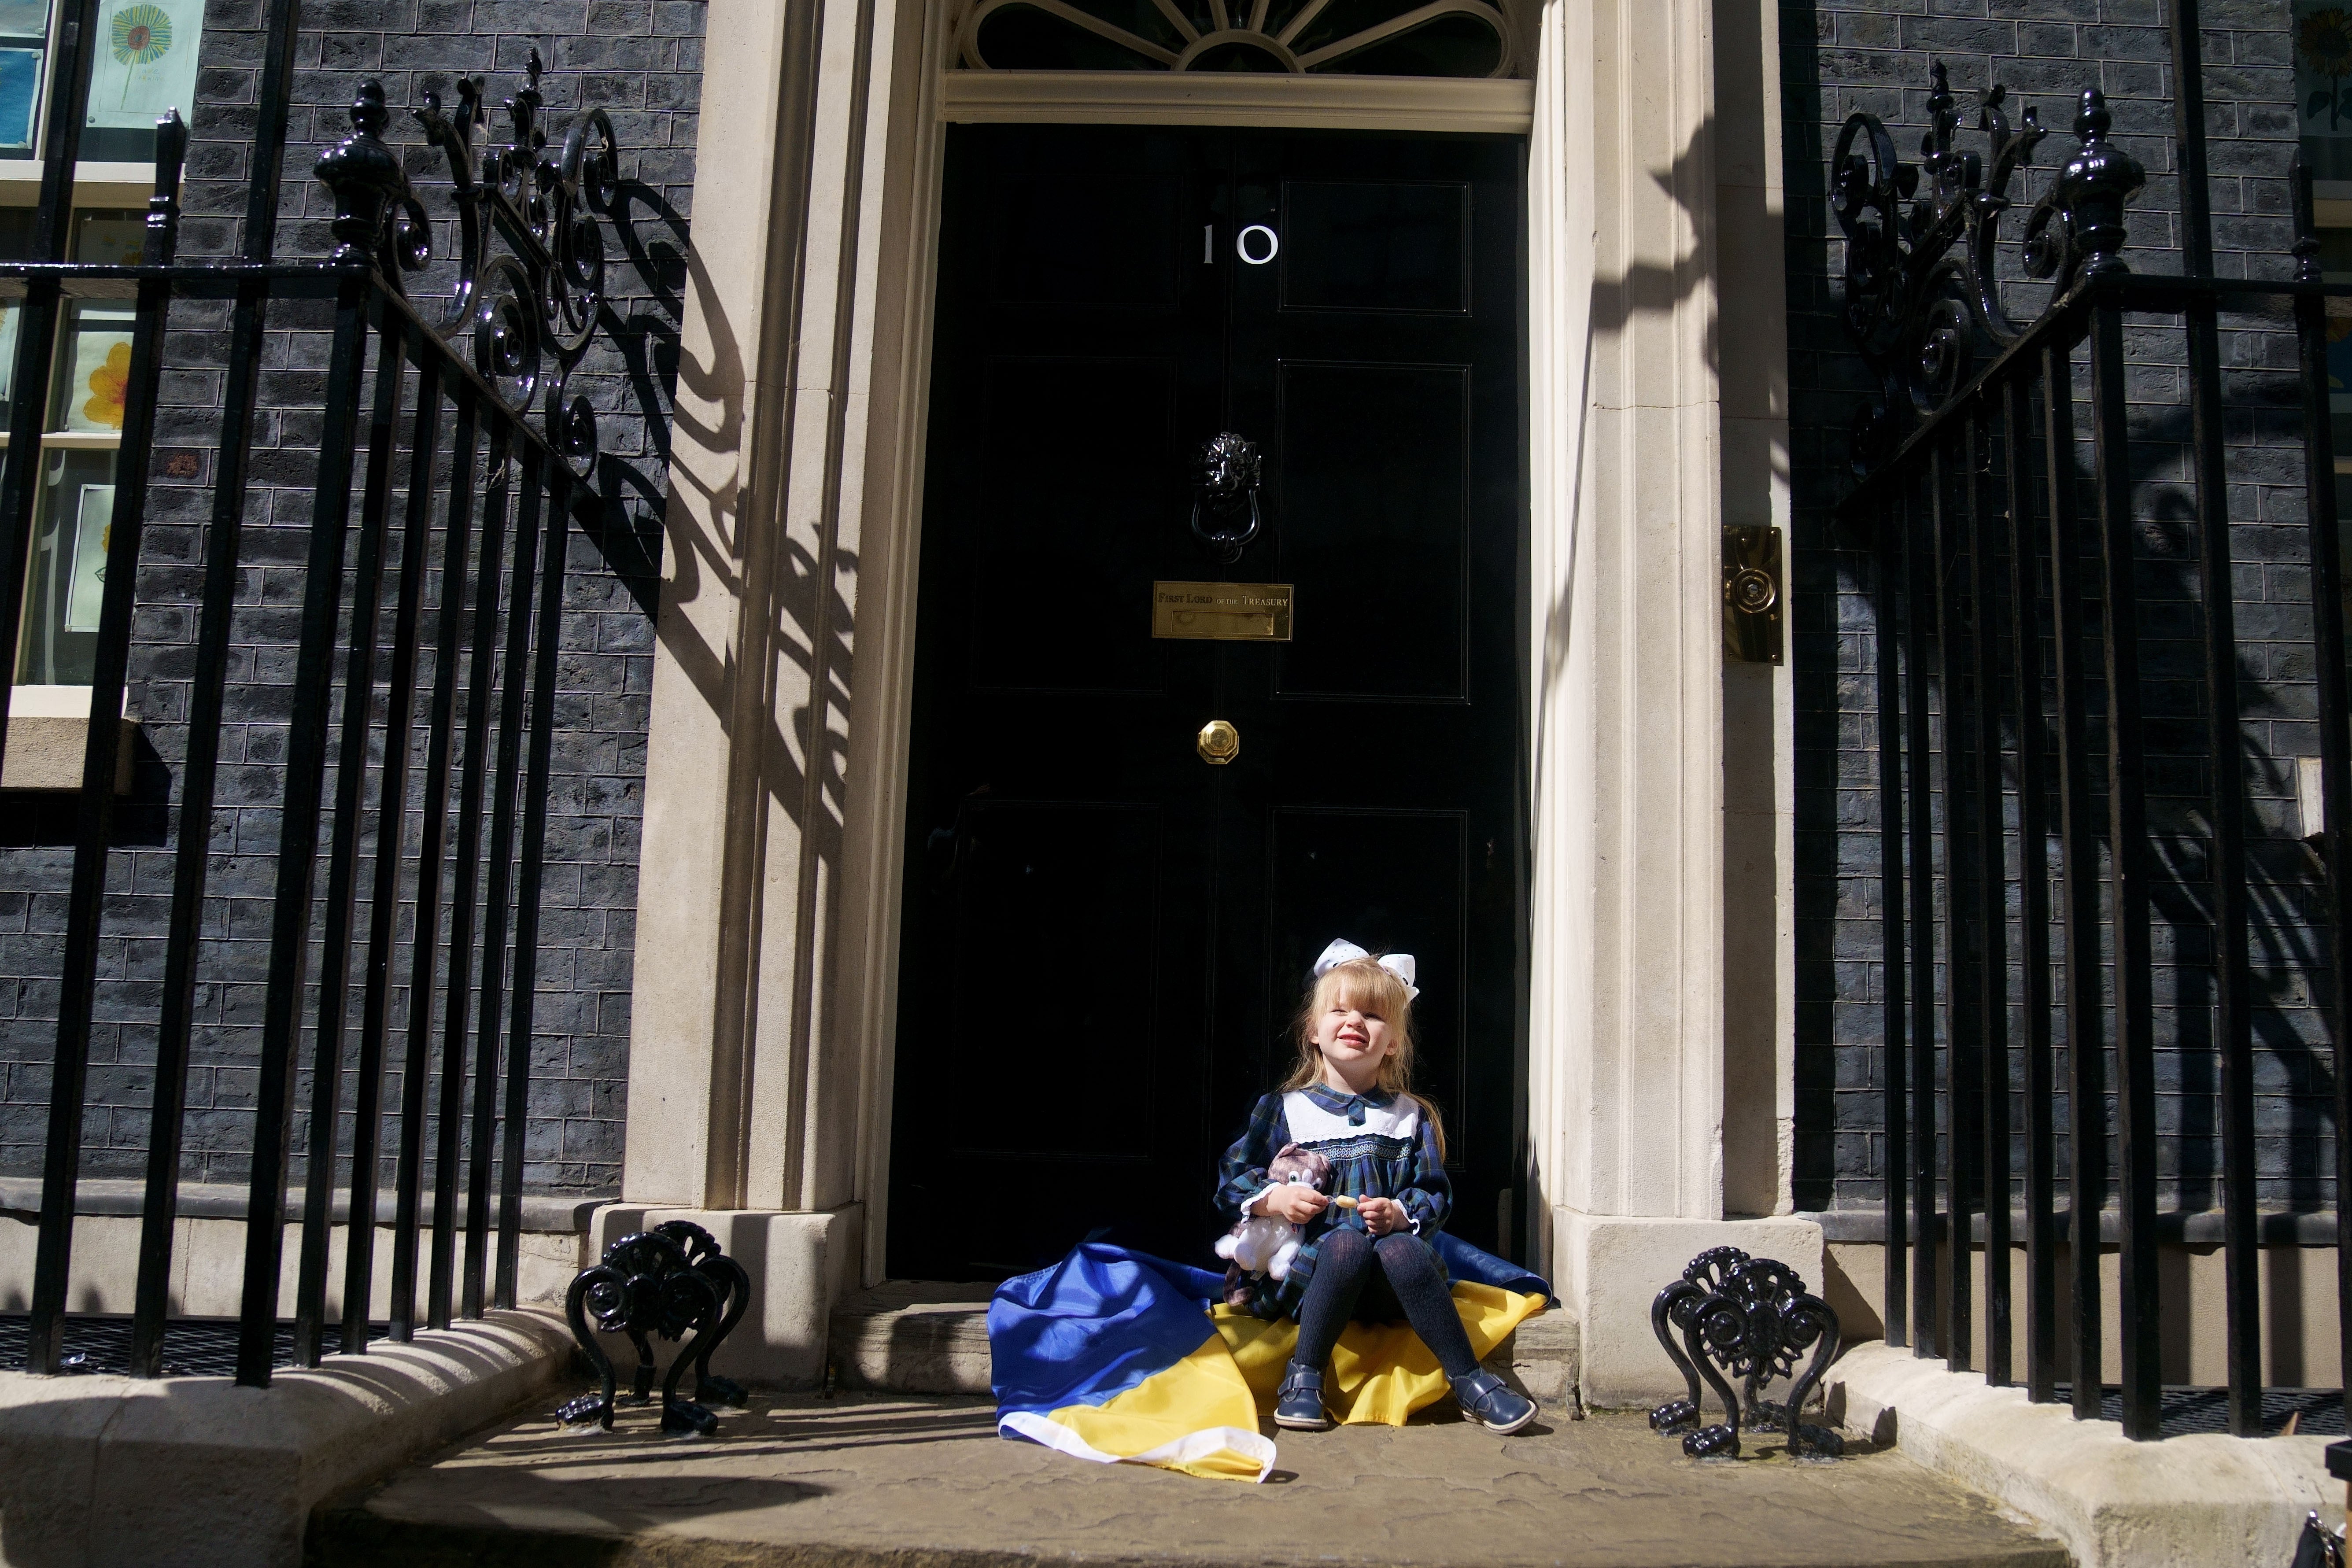 Ukrainian refugee Kira Ryndova, 3, sits on the steps of 10 Downing Street after her family met Boris Johnson last month